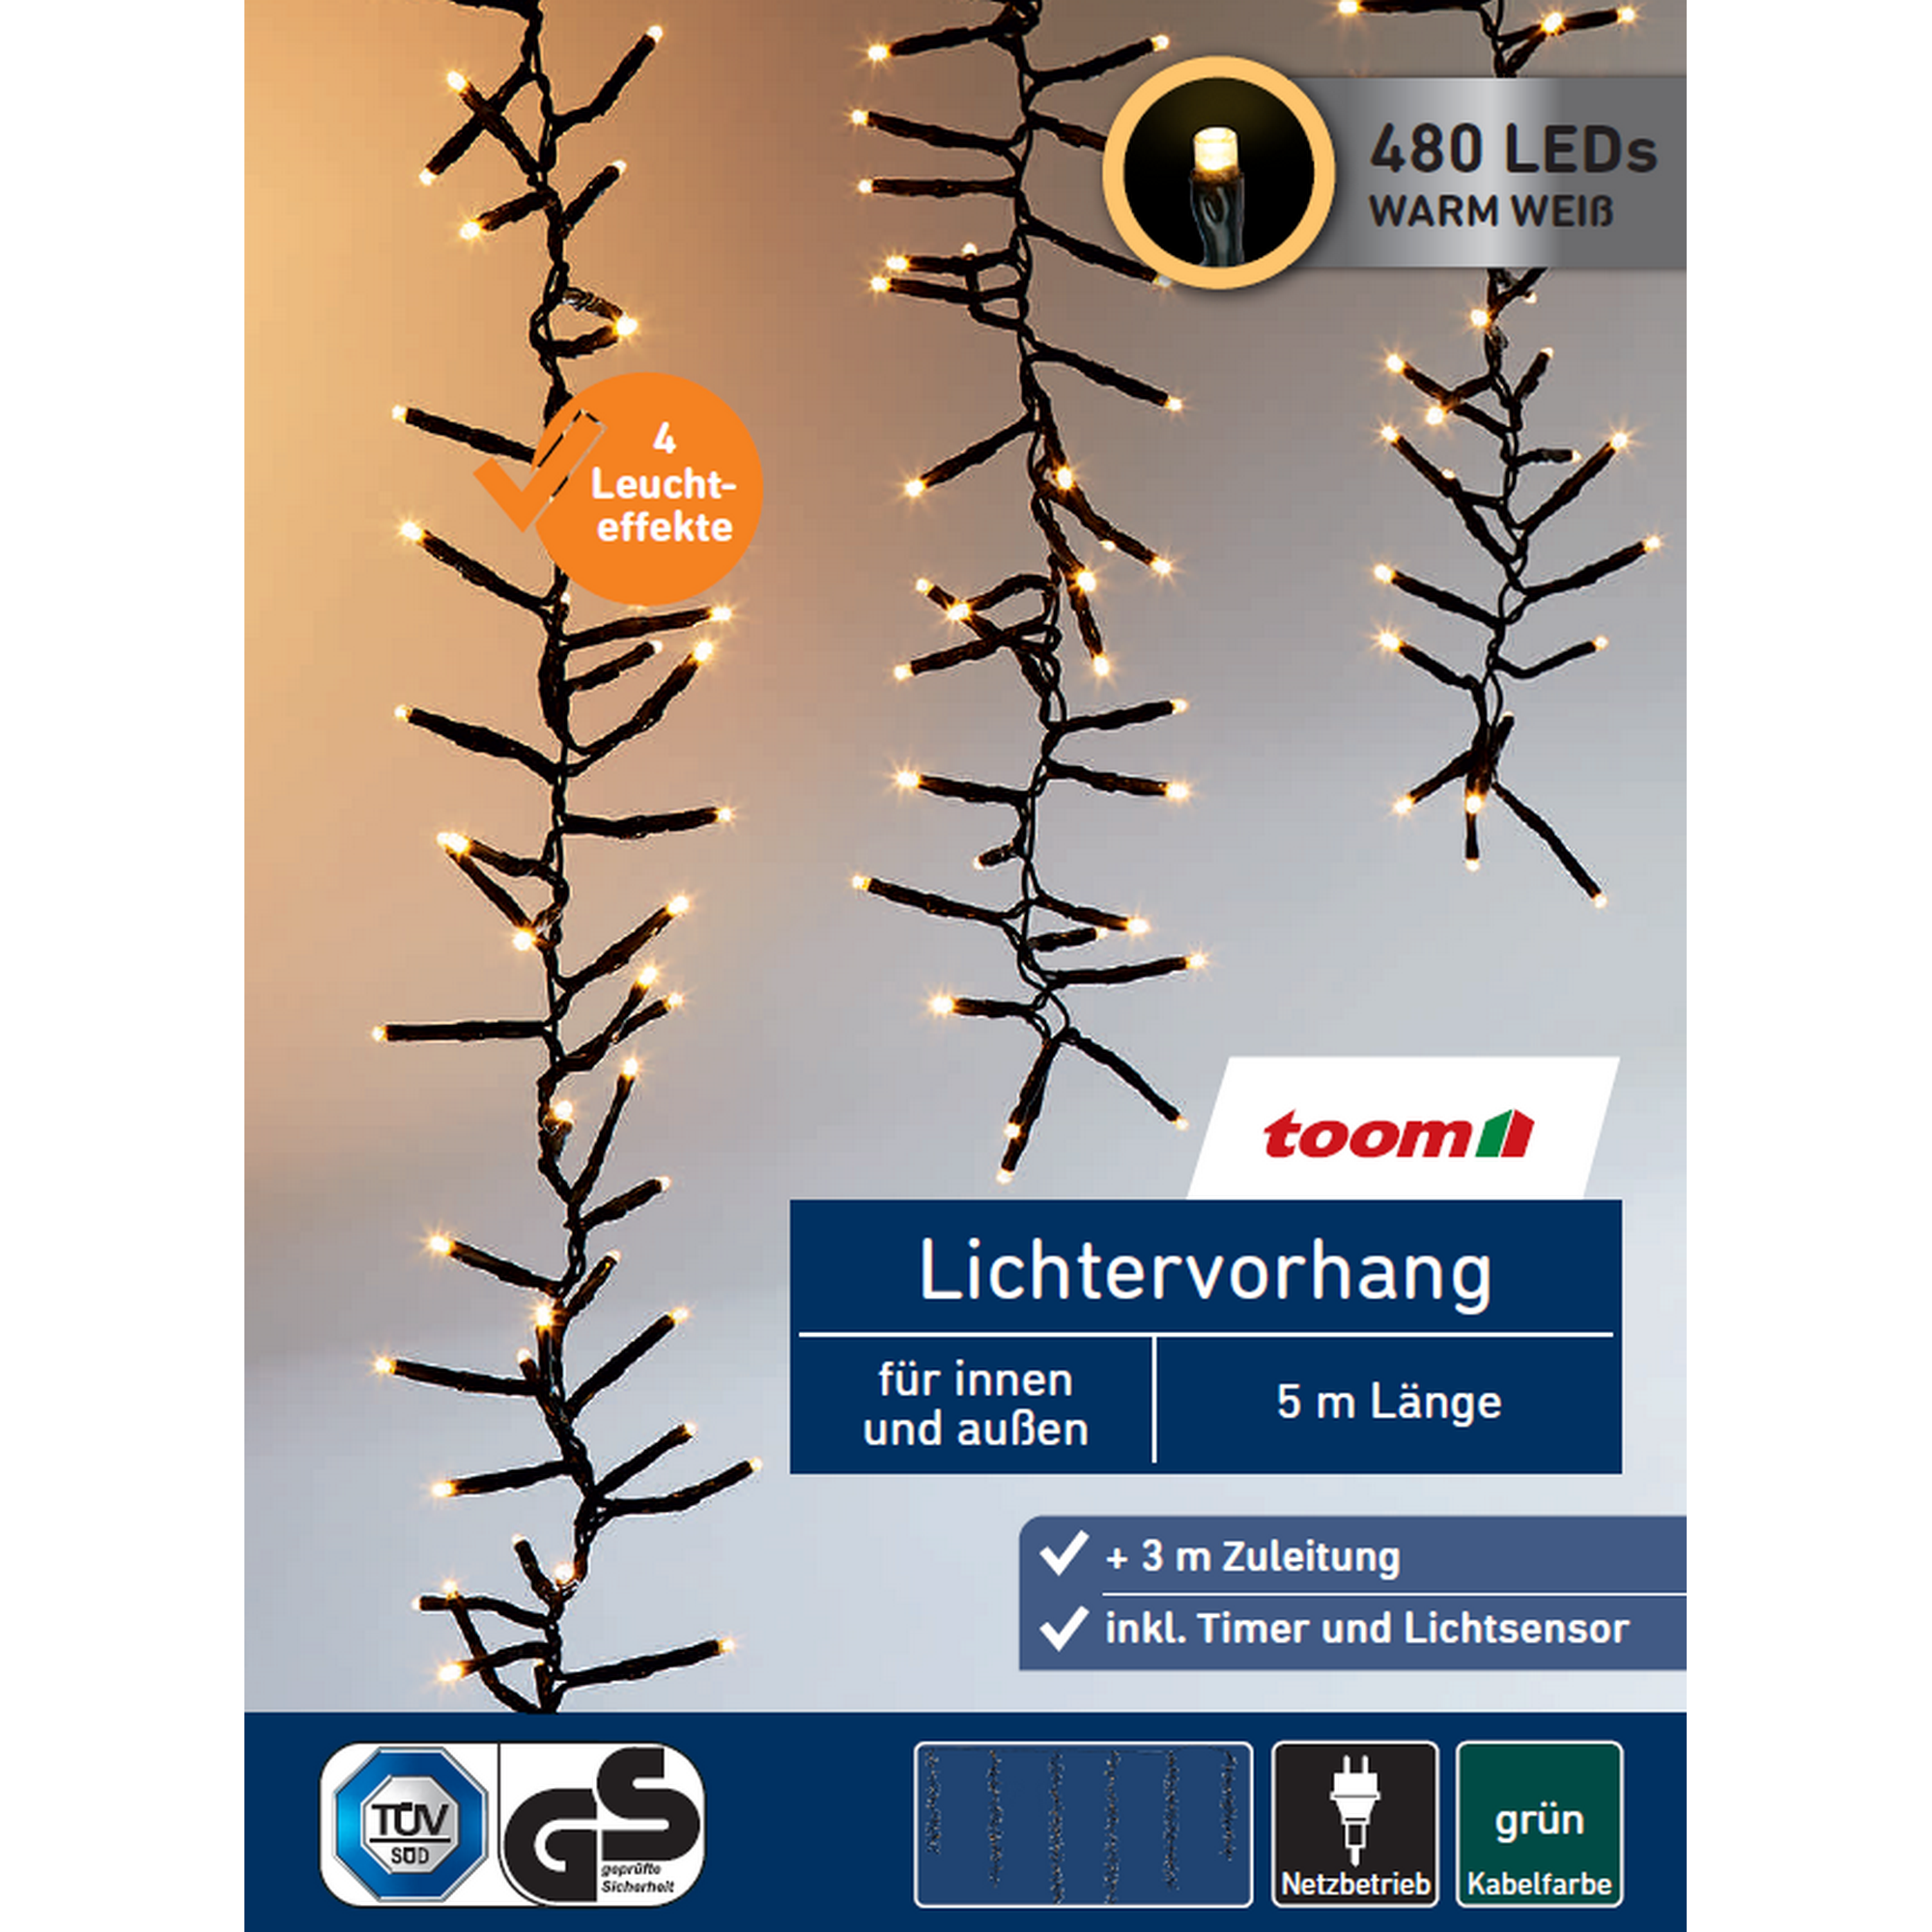 LED-Lichtervorhang 480 LEDs warmweiß 500 cm + product picture